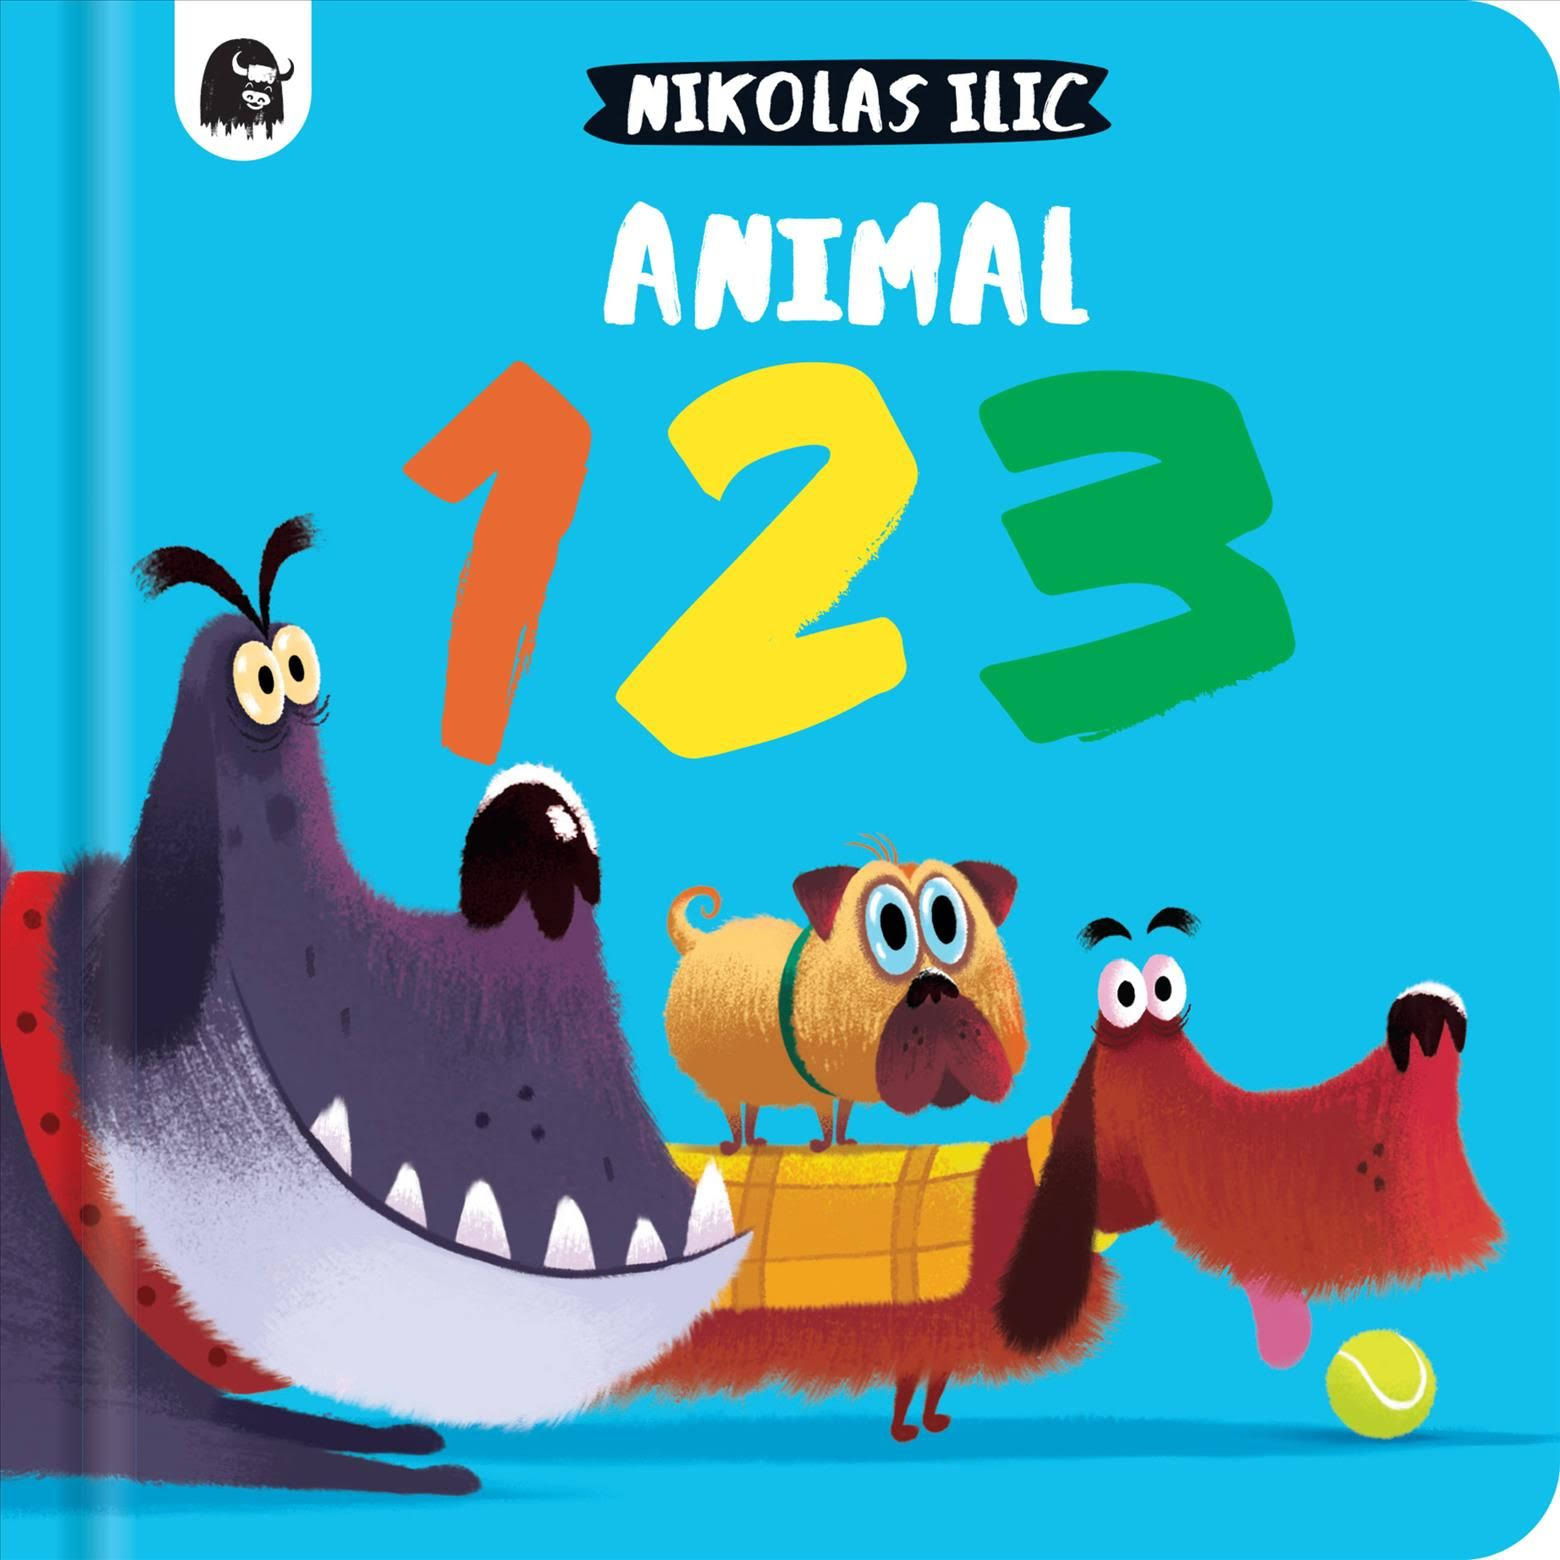 Animal 123 [Book]